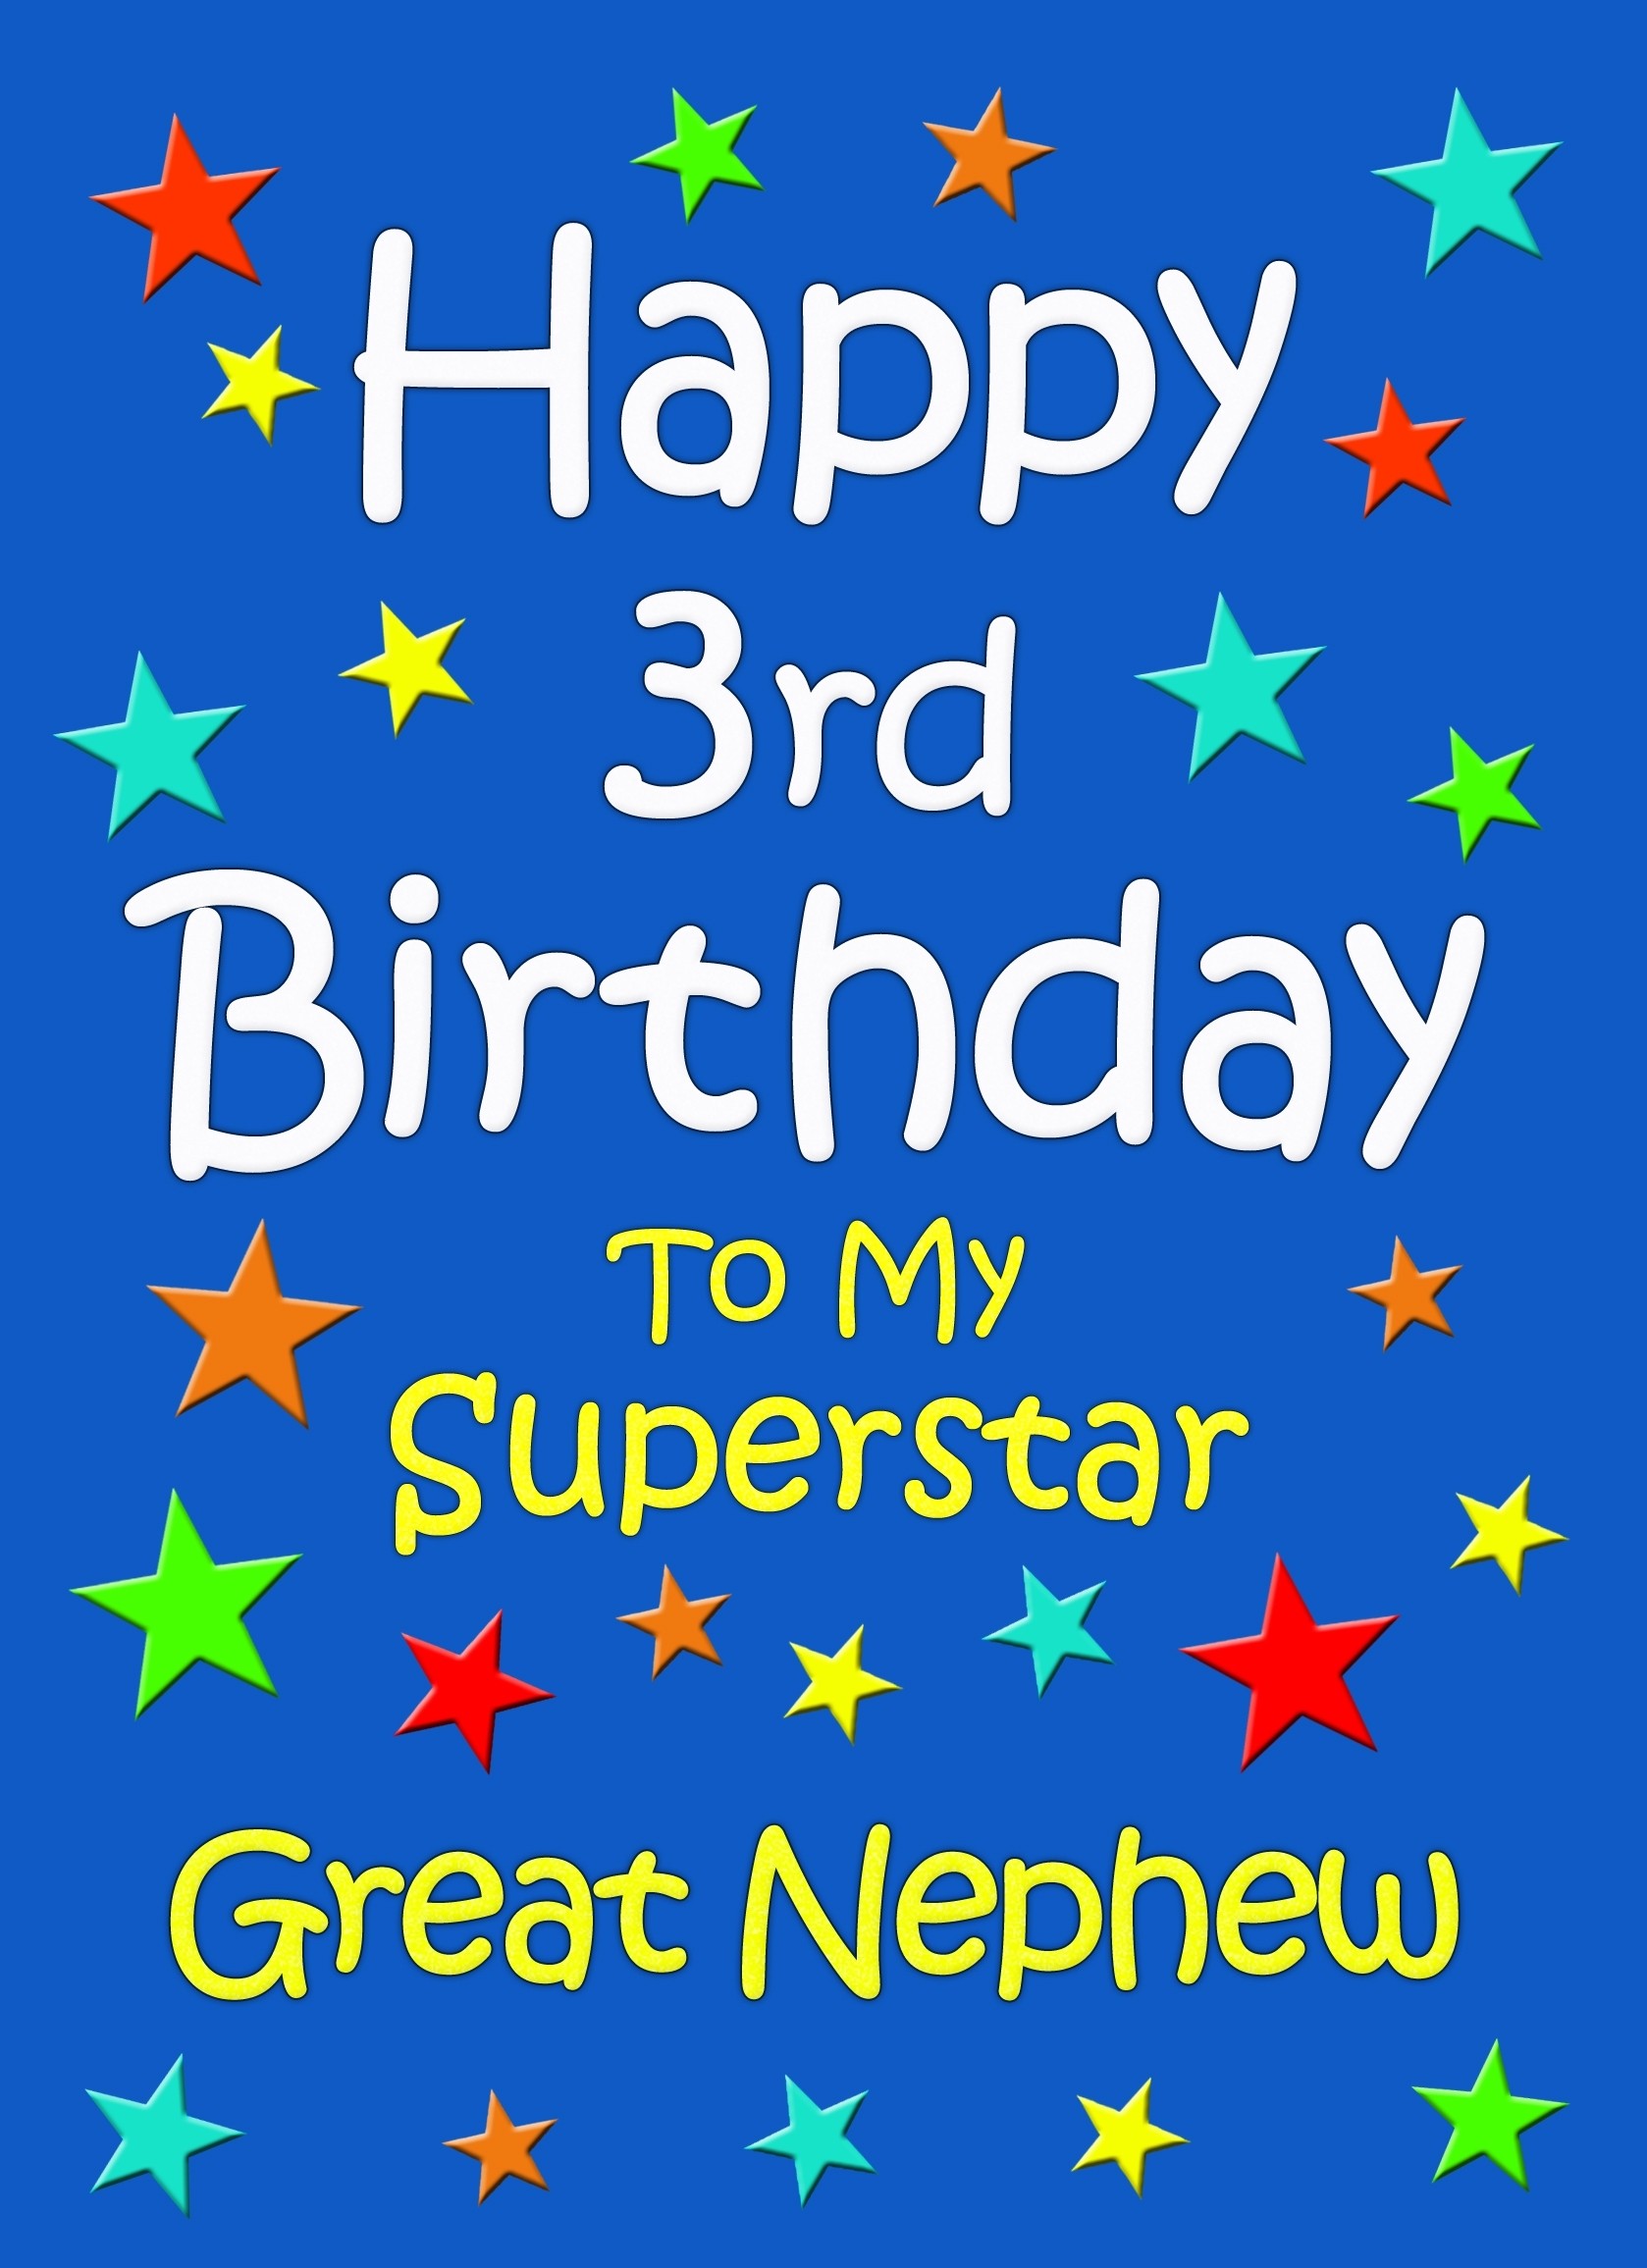 Great Nephew 3rd Birthday Card (Blue)